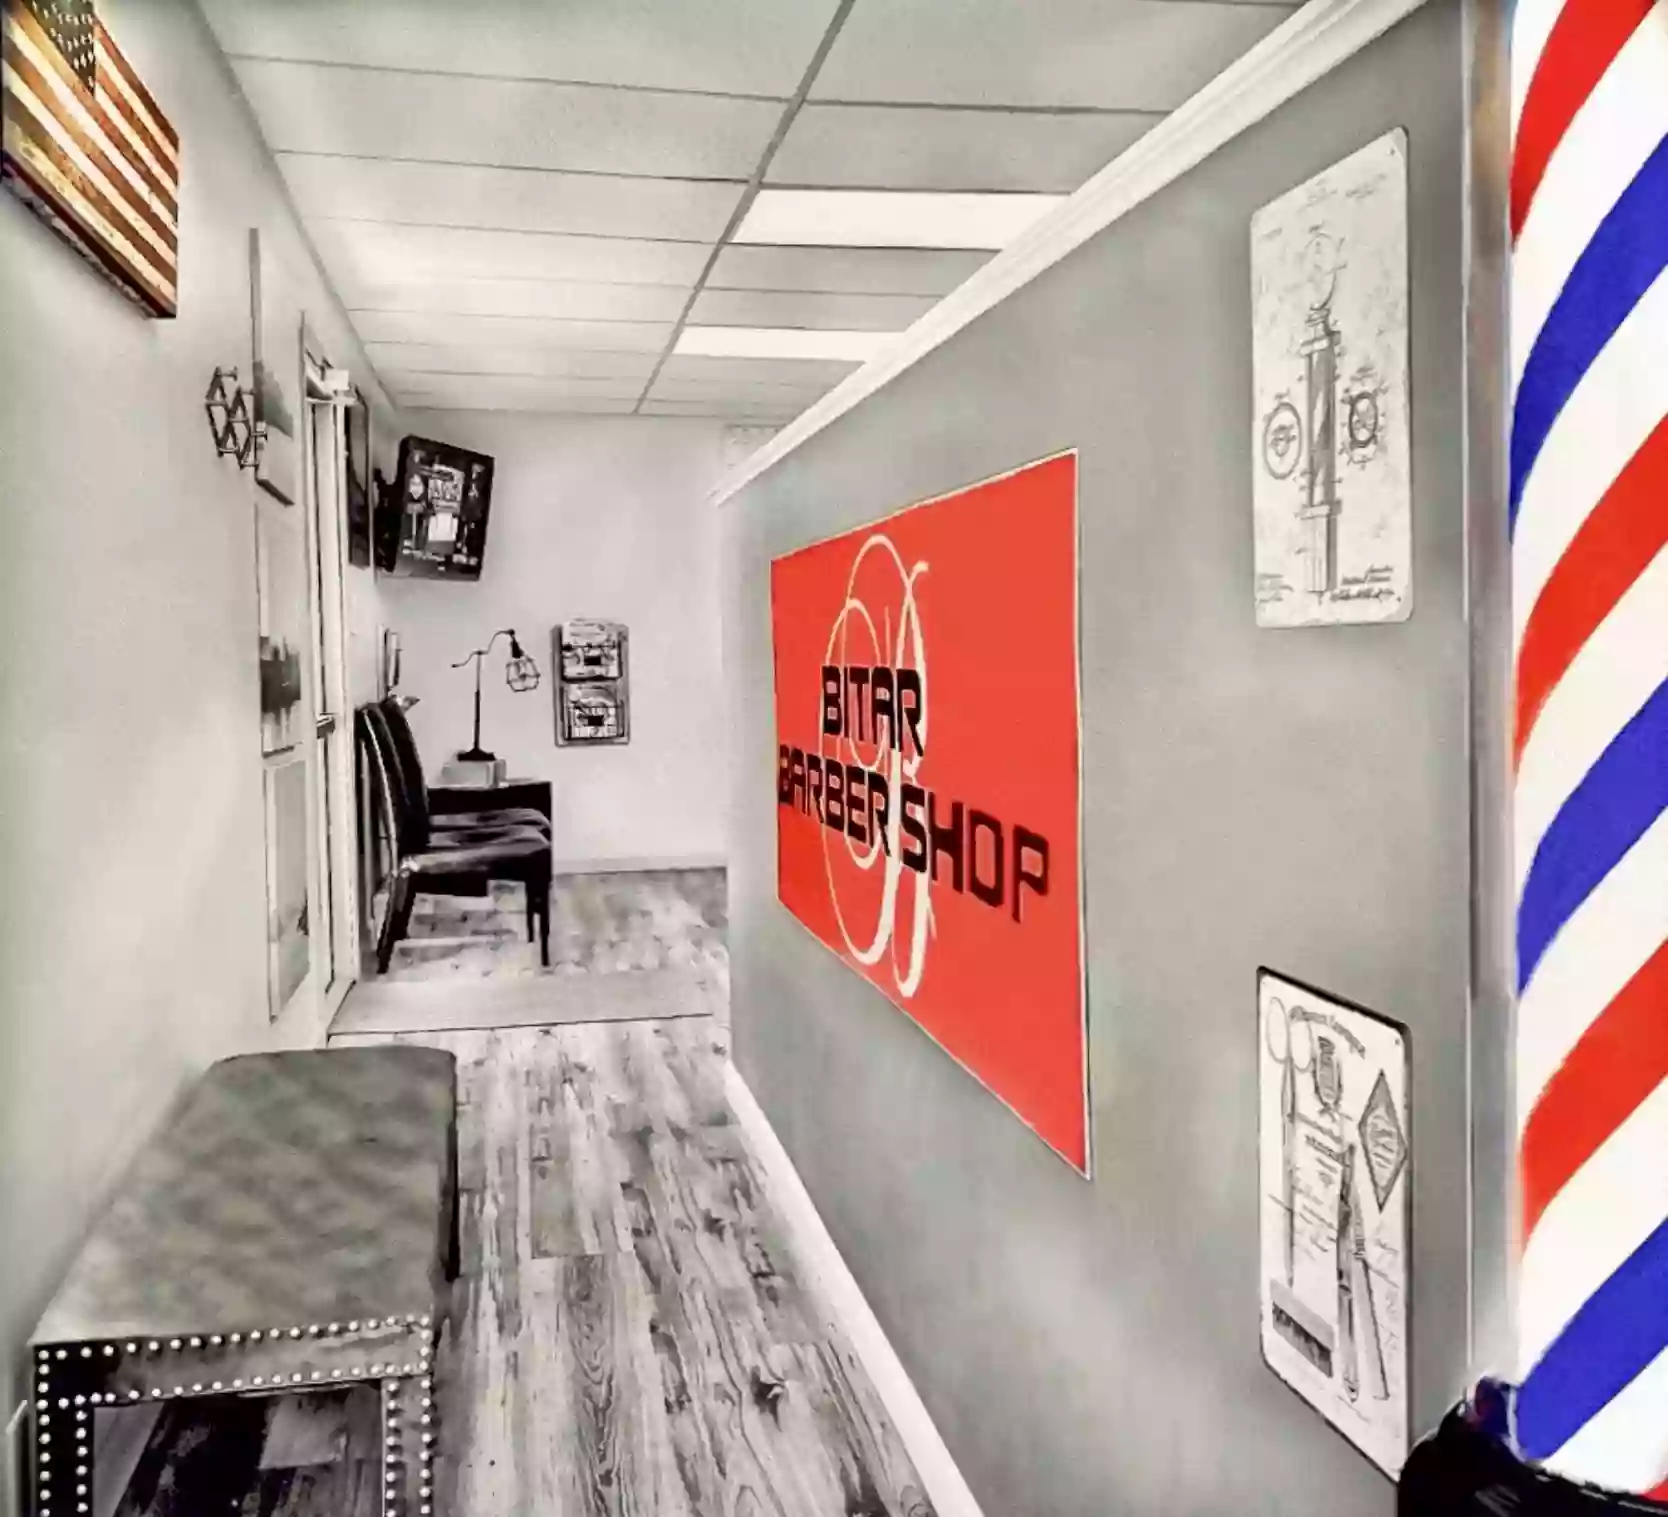 Bitar Barber Shop